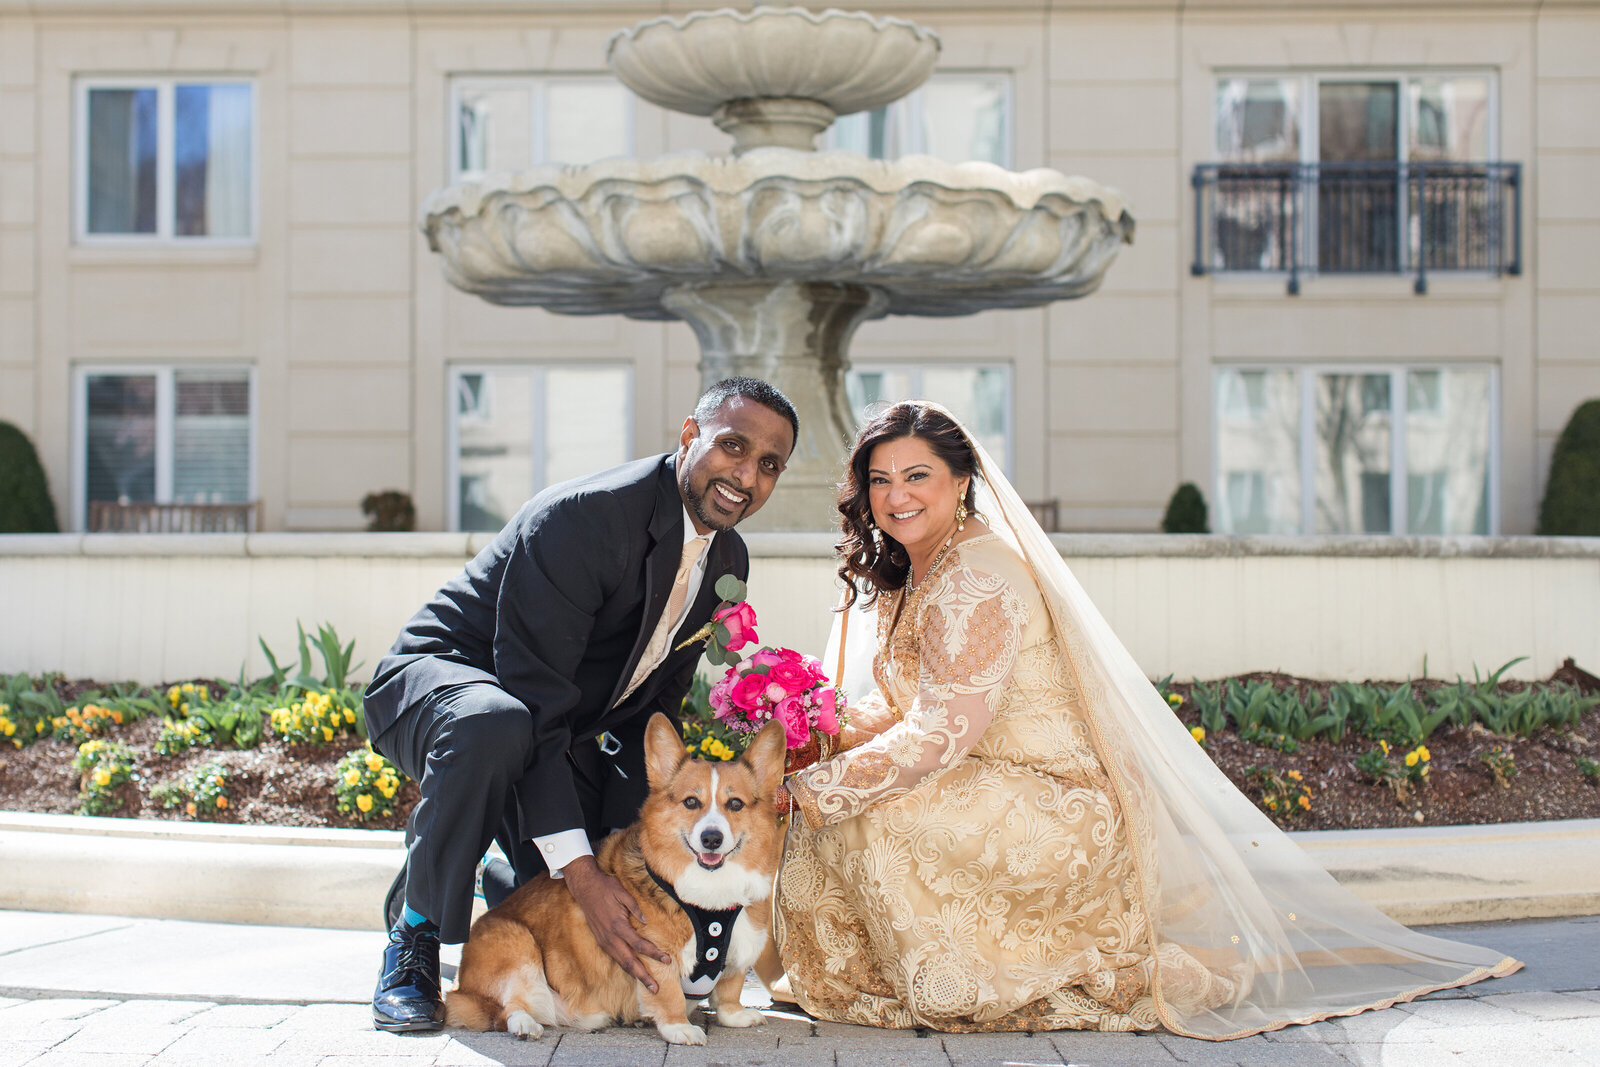 Westin Annapolis wedding photo of couple with dog by Maryland photographer Christa Rae Photography